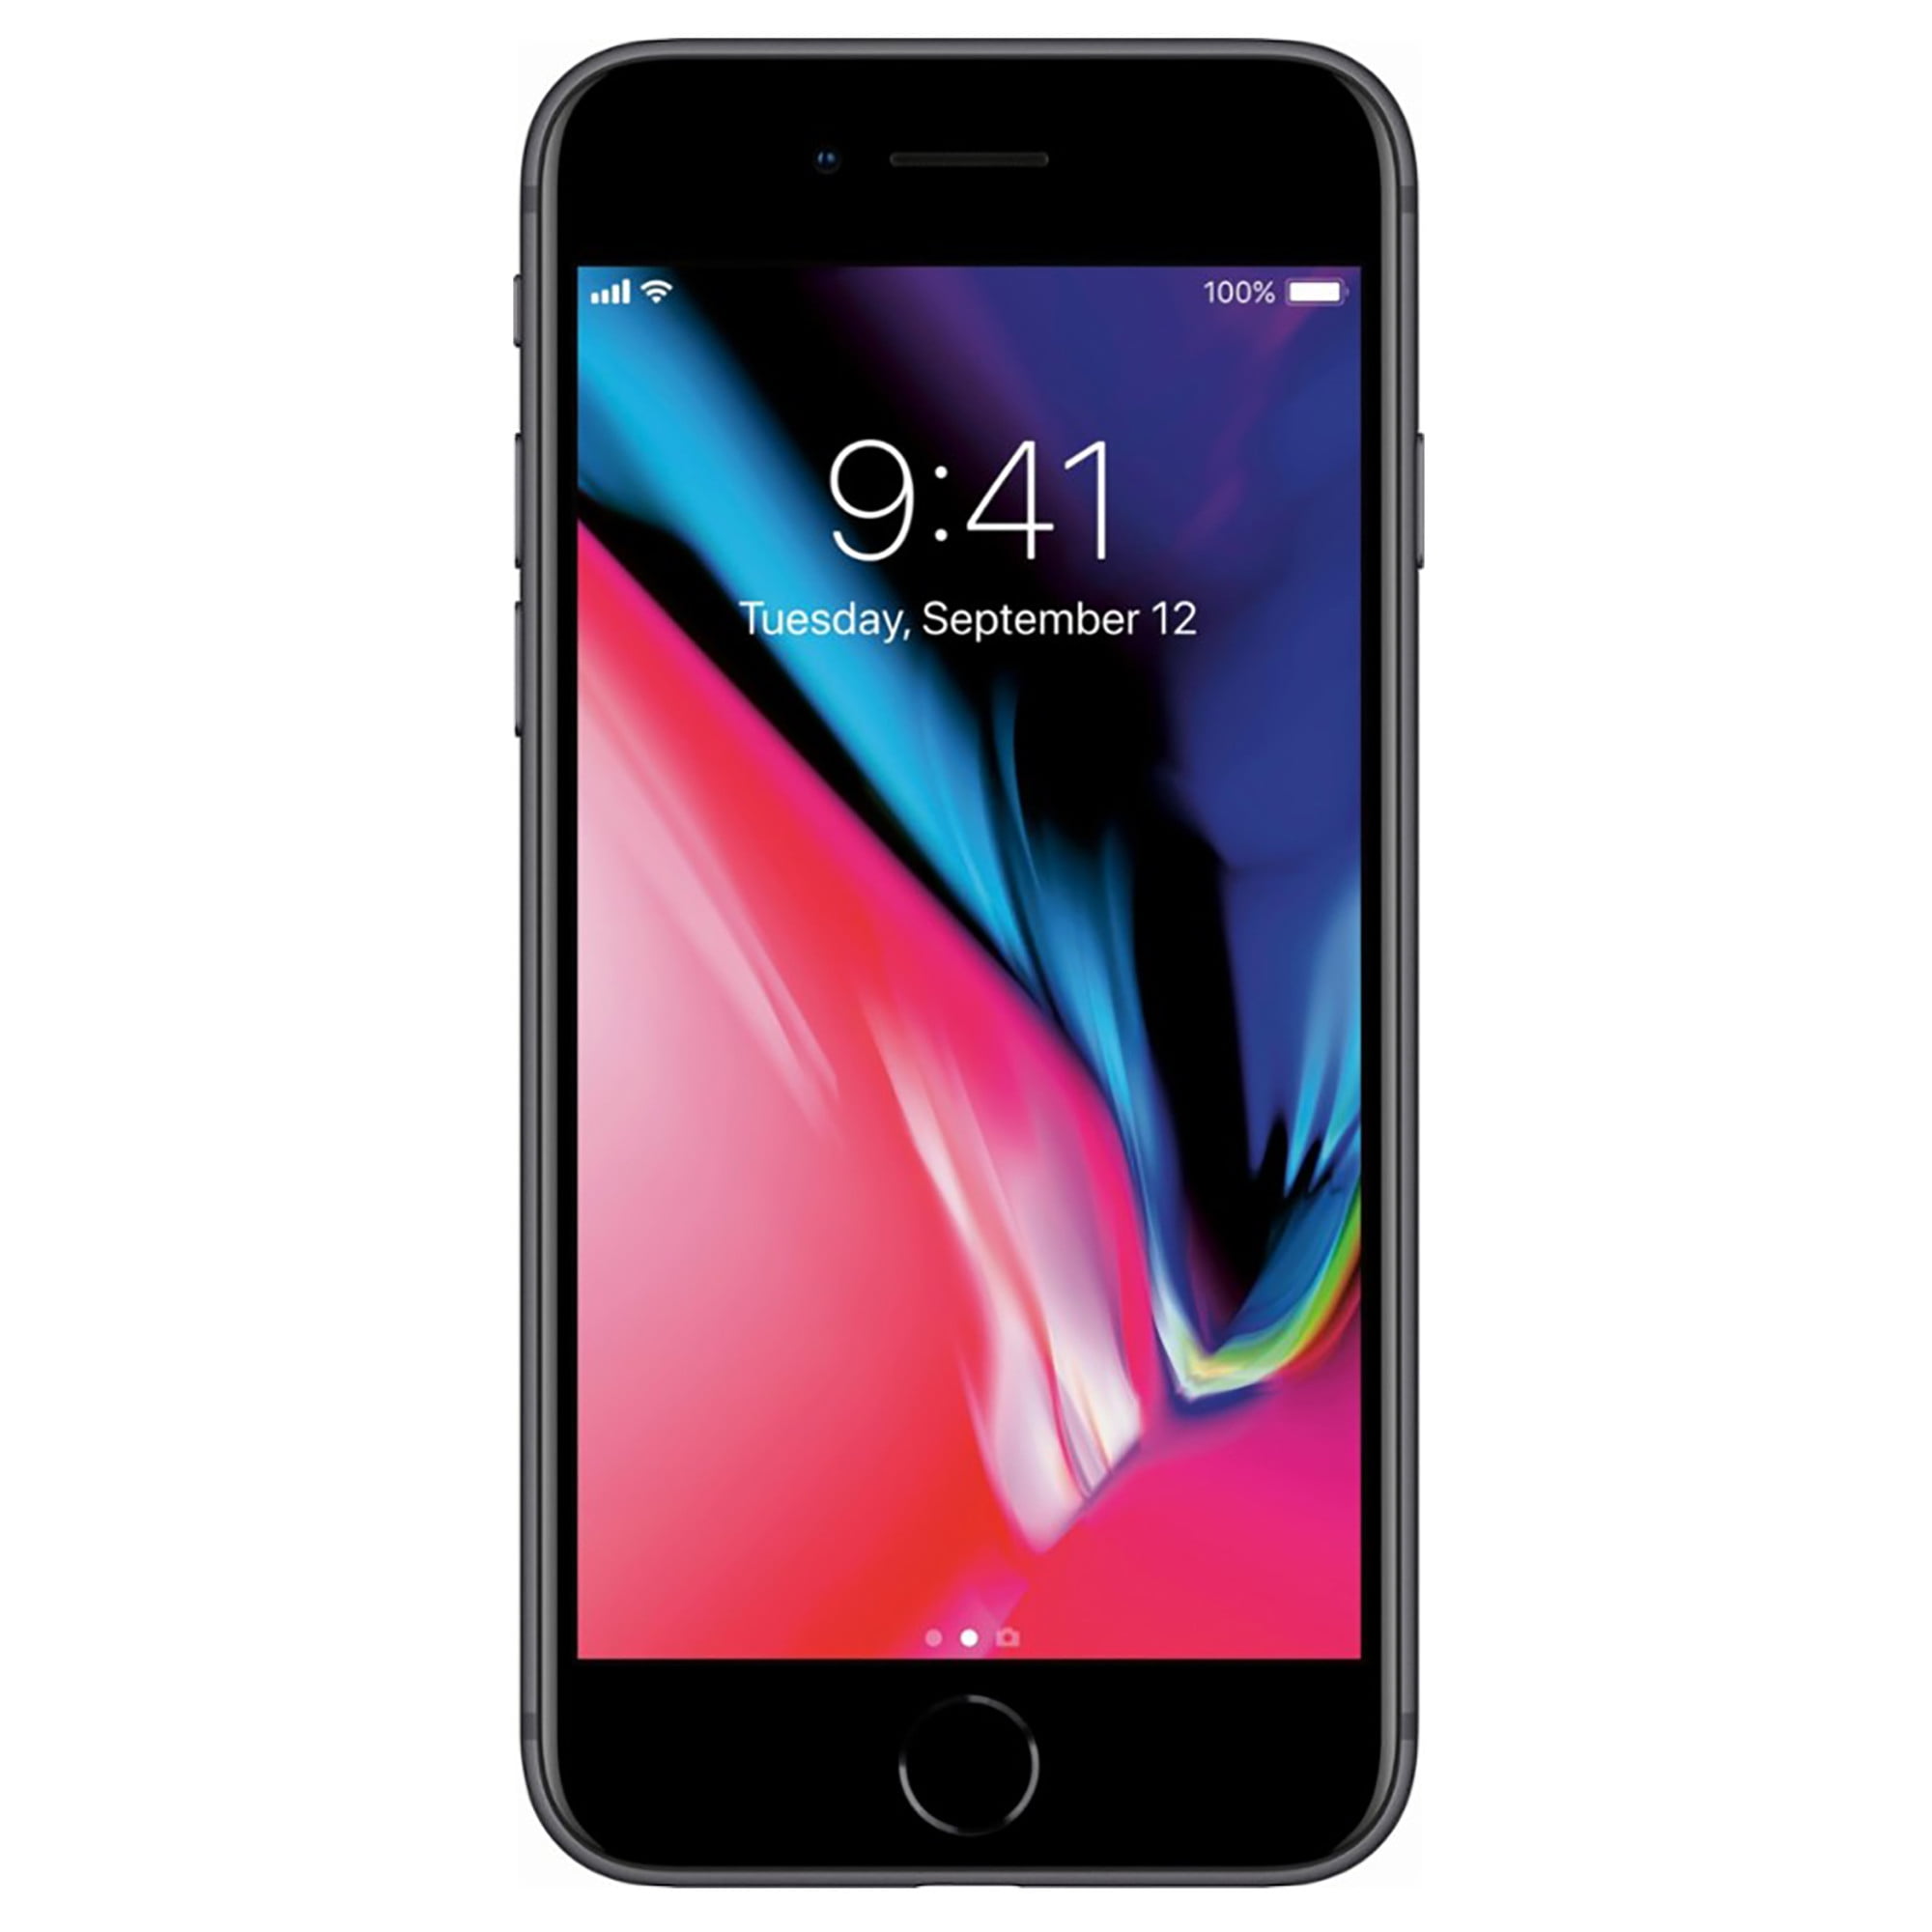 Apple iPhone 8 64GB Unlocked GSM/CDMA Phone w/ 12MP Camera - Space Gray  (Used)